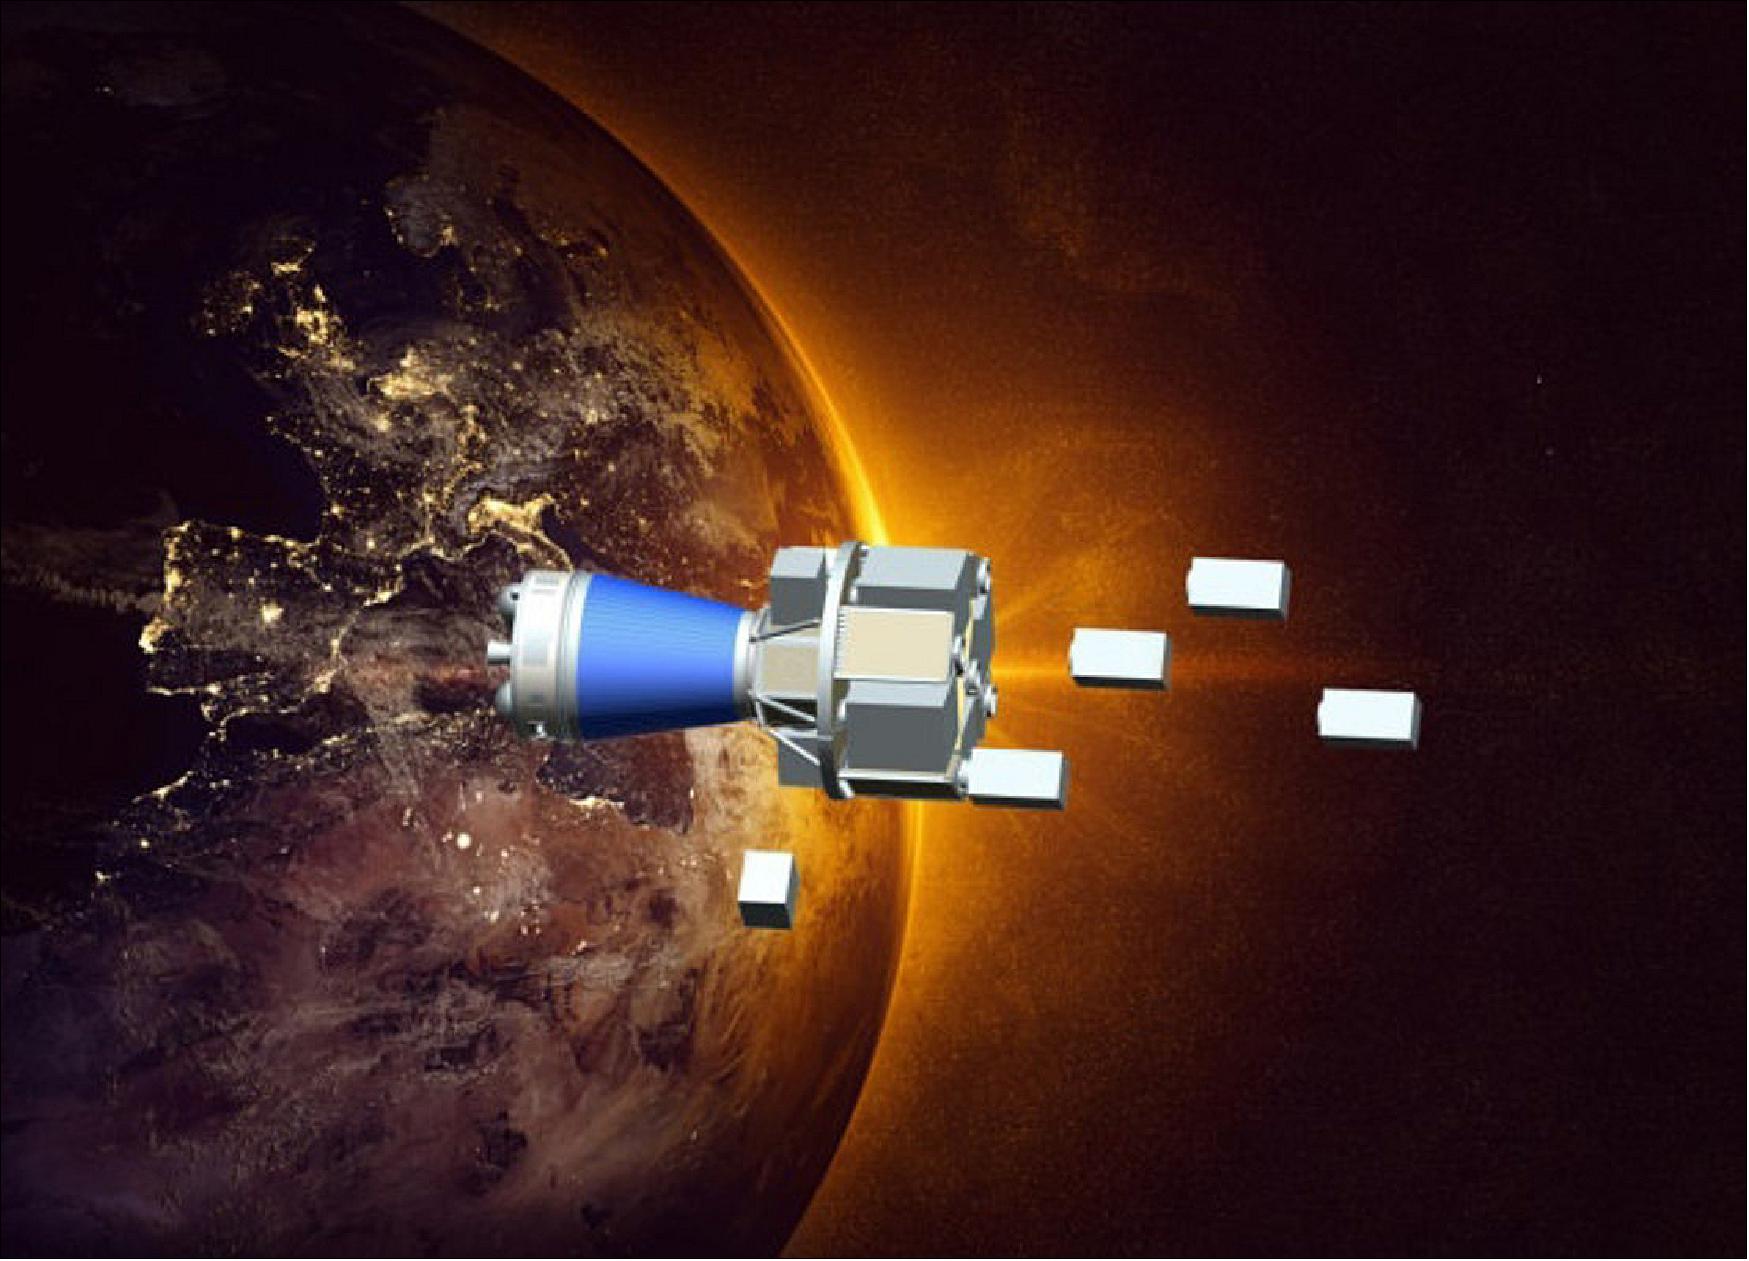 Figure 115: Vega’s versatile Small Satellites Mission Service dispenser developed within ESA’s Light satellite Launch opportunities initiative is designed to deploy multiple light satellites below 500 kg (image credit: ESA) 106)